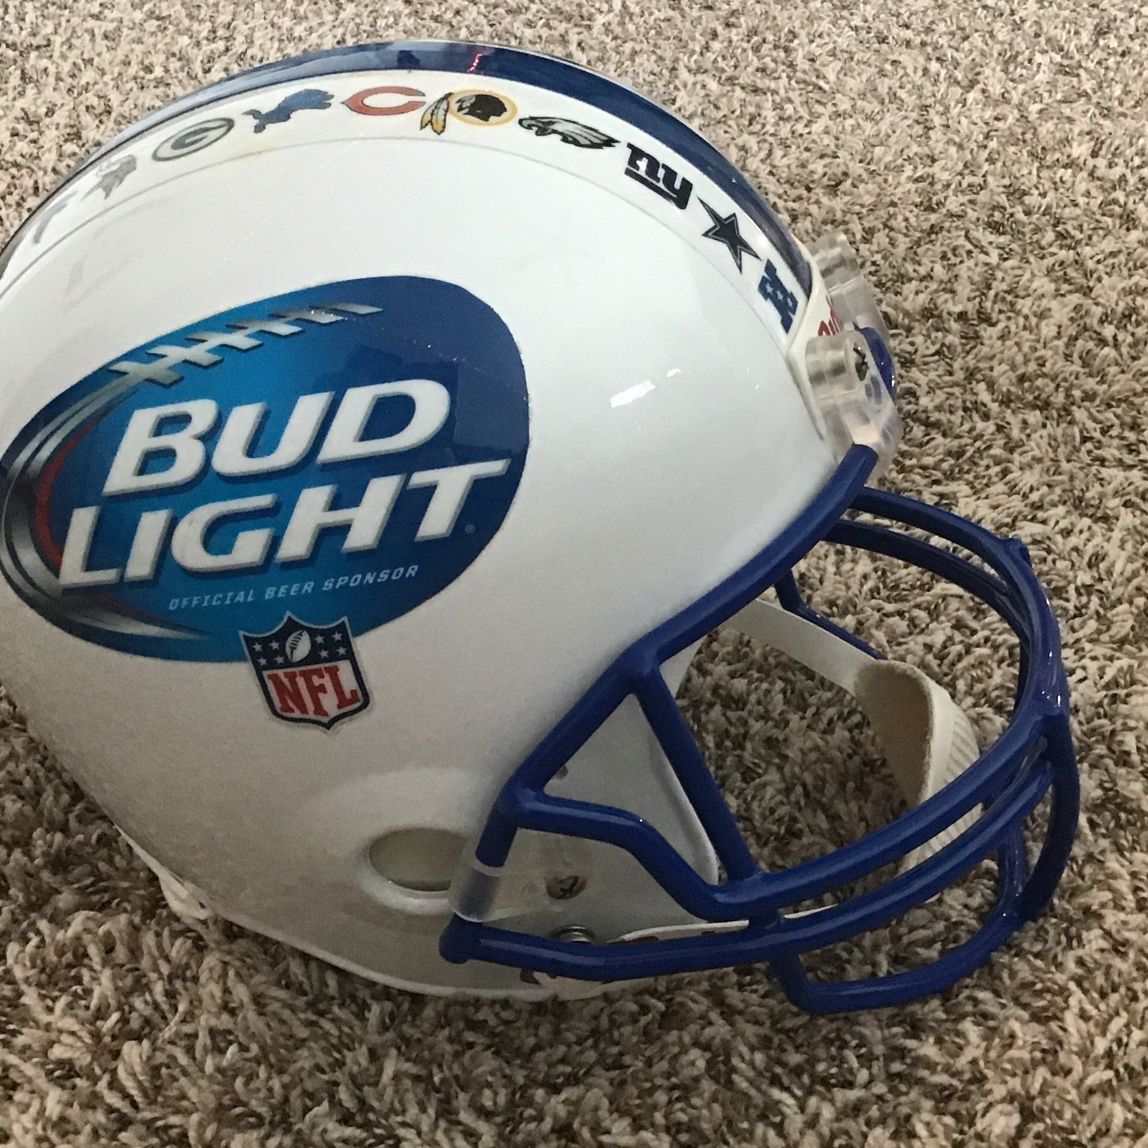 Very Rare NFL Budlight Helmet